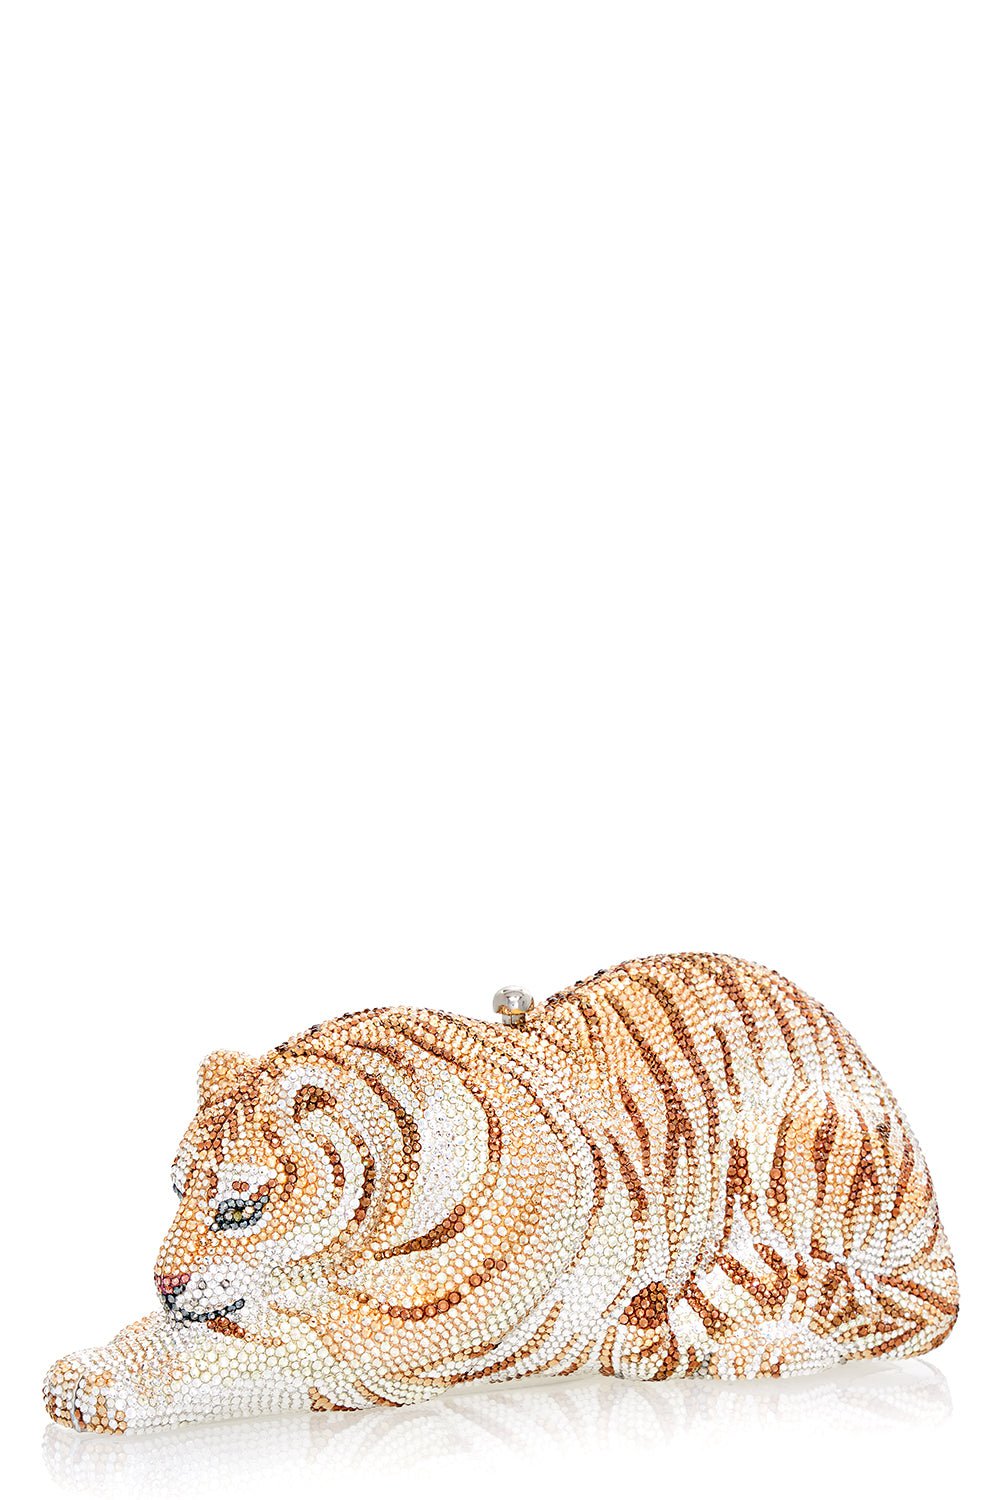 JUDITH LEIBER-Wildcat Golden Cub Bag-SILVER BLONDE MULTI